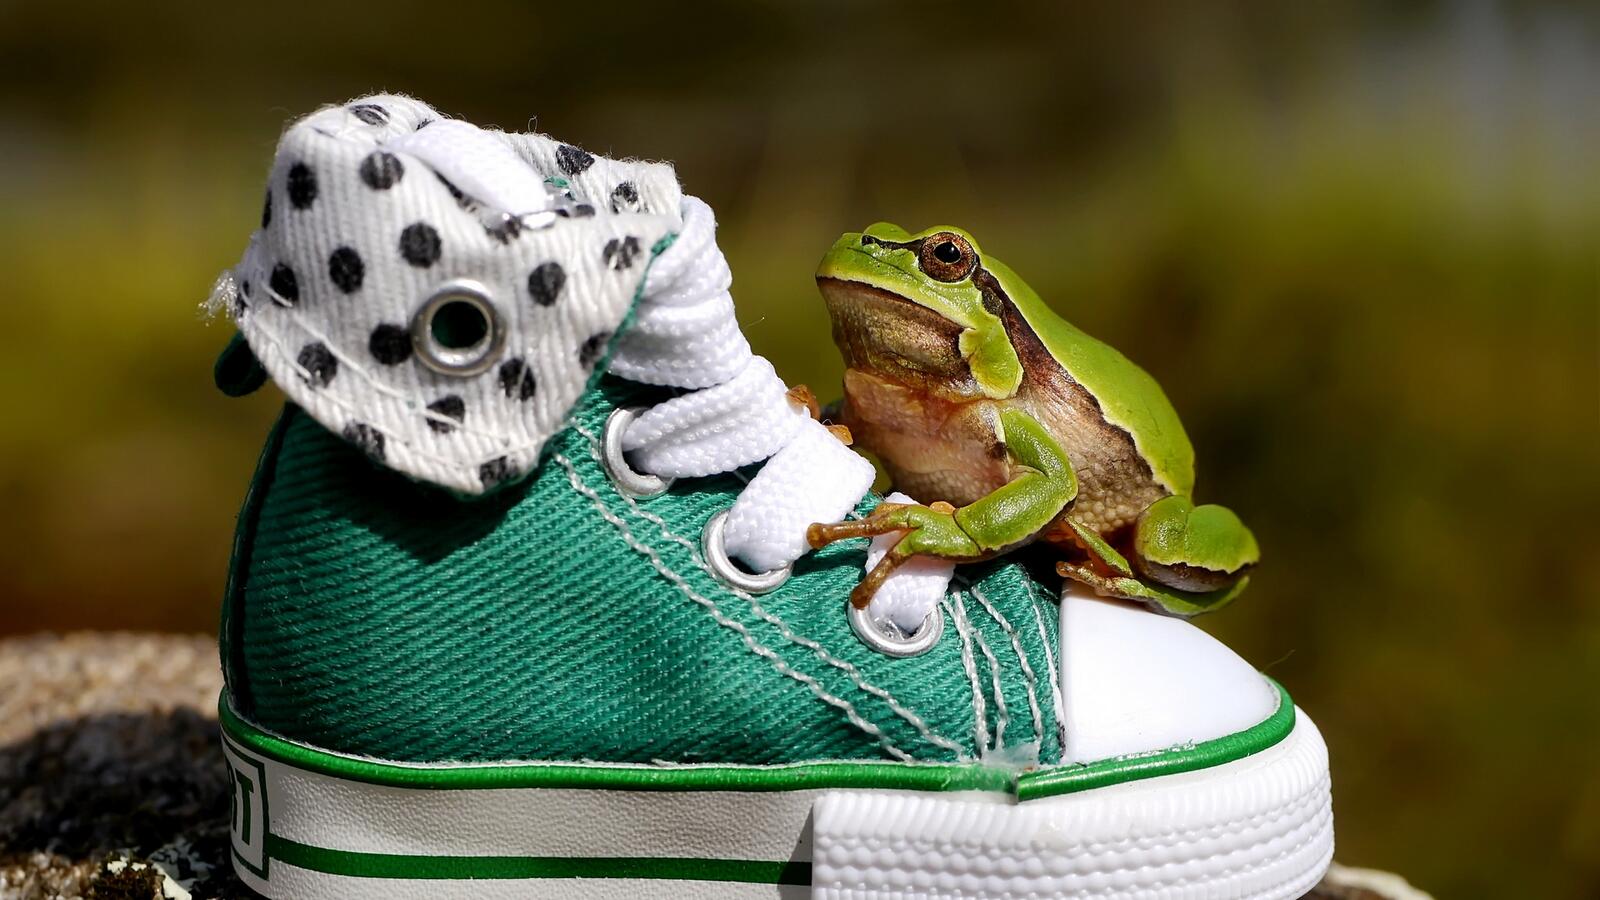 Wallpapers sneakers frog green on the desktop